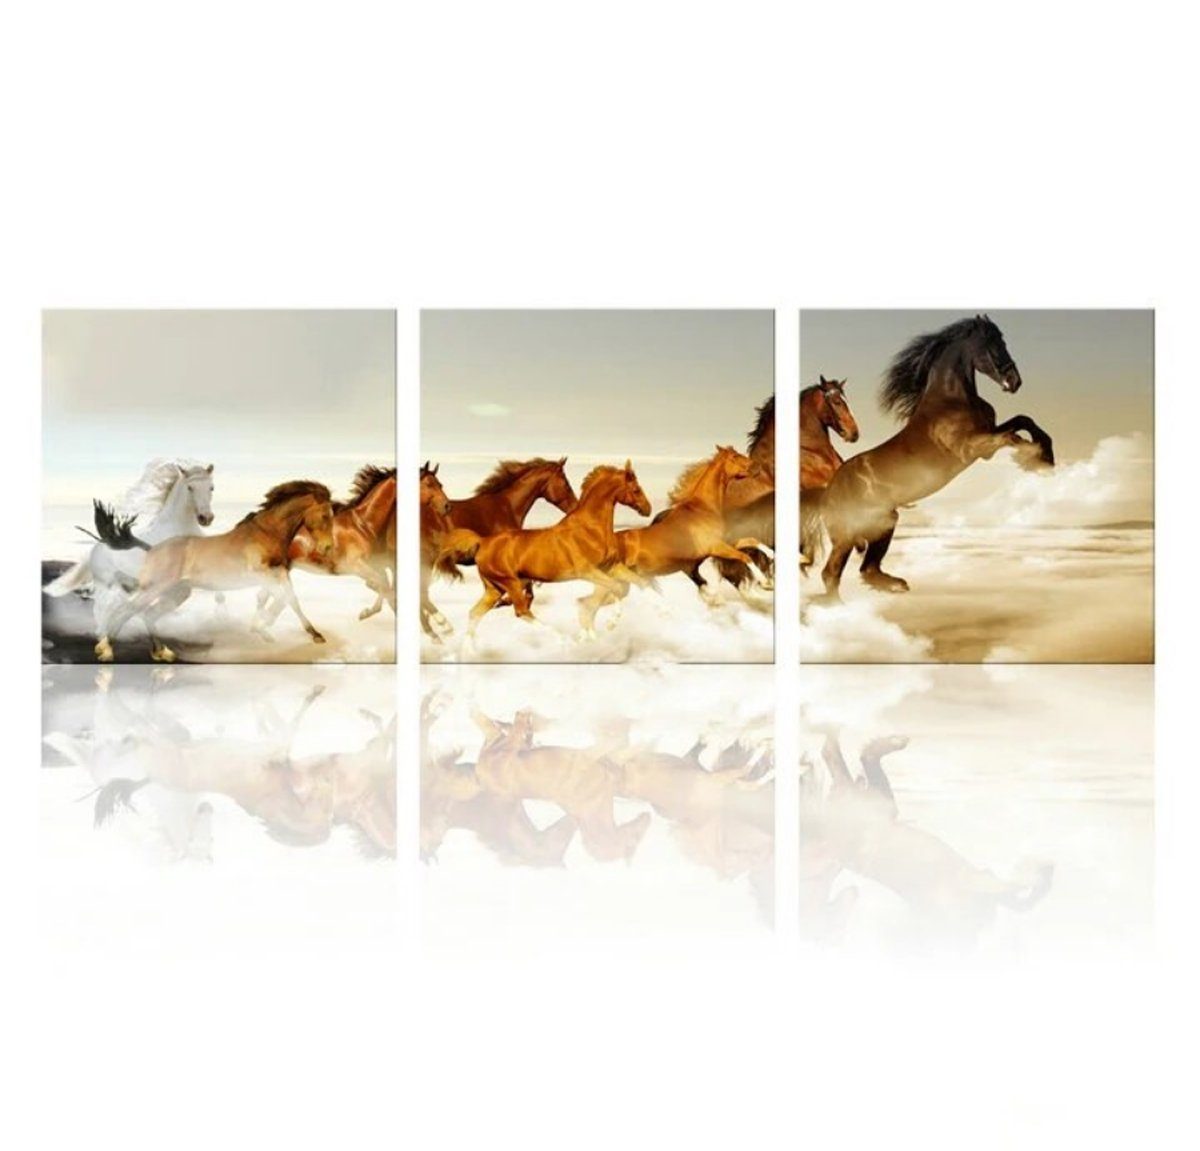 TPFLiving Kunstdruck (OHNE RAHMEN) Poster - Leinwand - Wandbild, 3 Panels Orchideenblüten Poster Wandkunst Leinwandgemälde (Leinwandbild XXL), Farben: Weiß, Rosa, Lila, Grün, Orange, Blau -Größe: 20x20cm